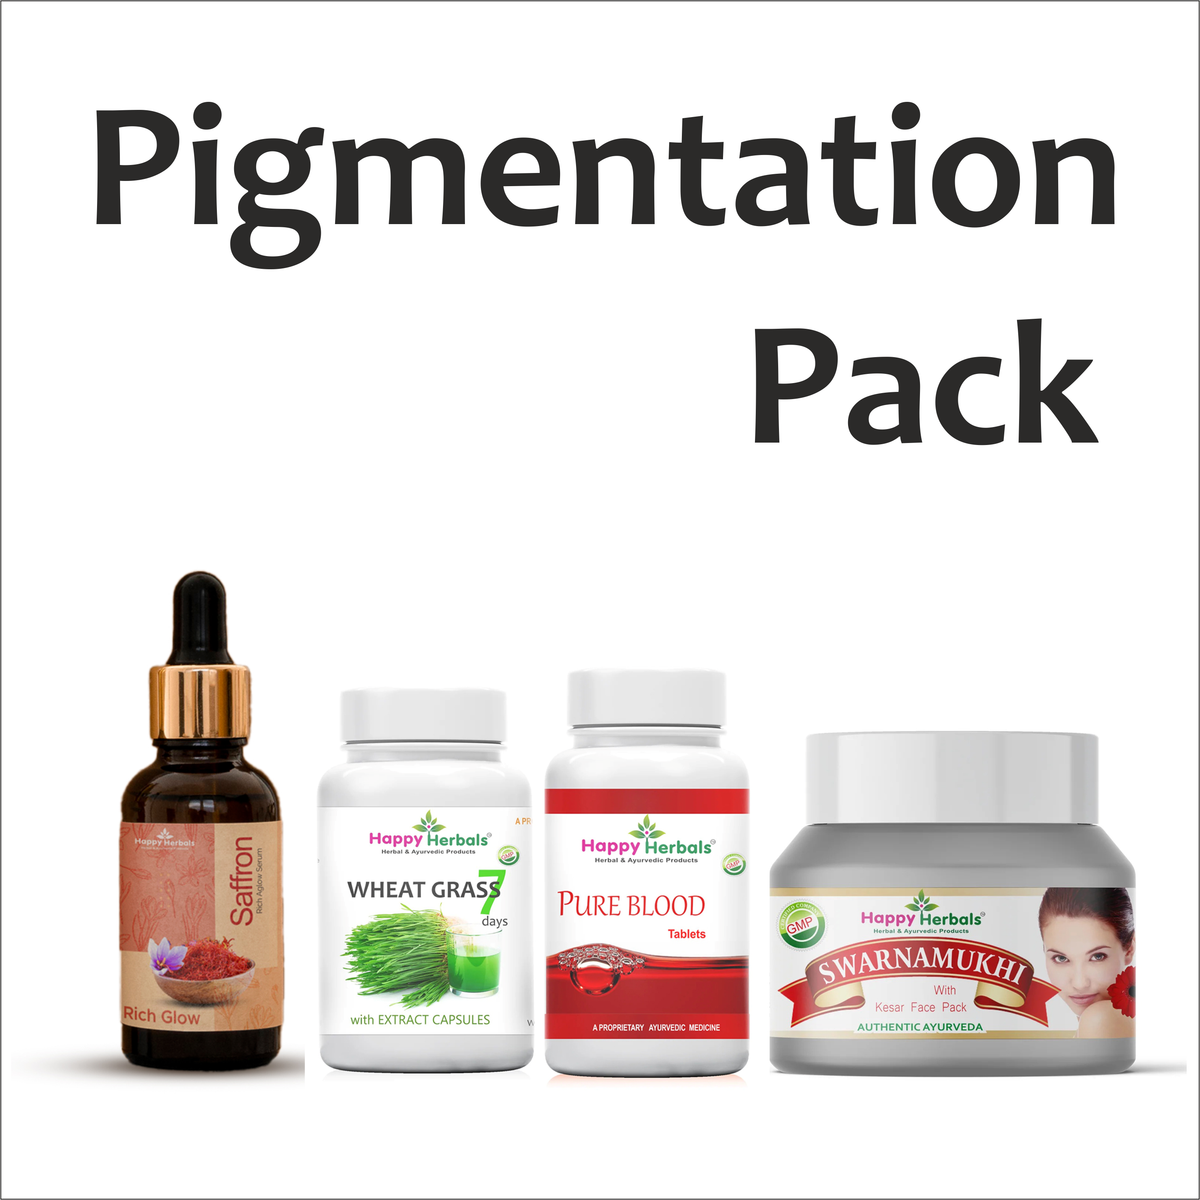 Pigmentation Pack